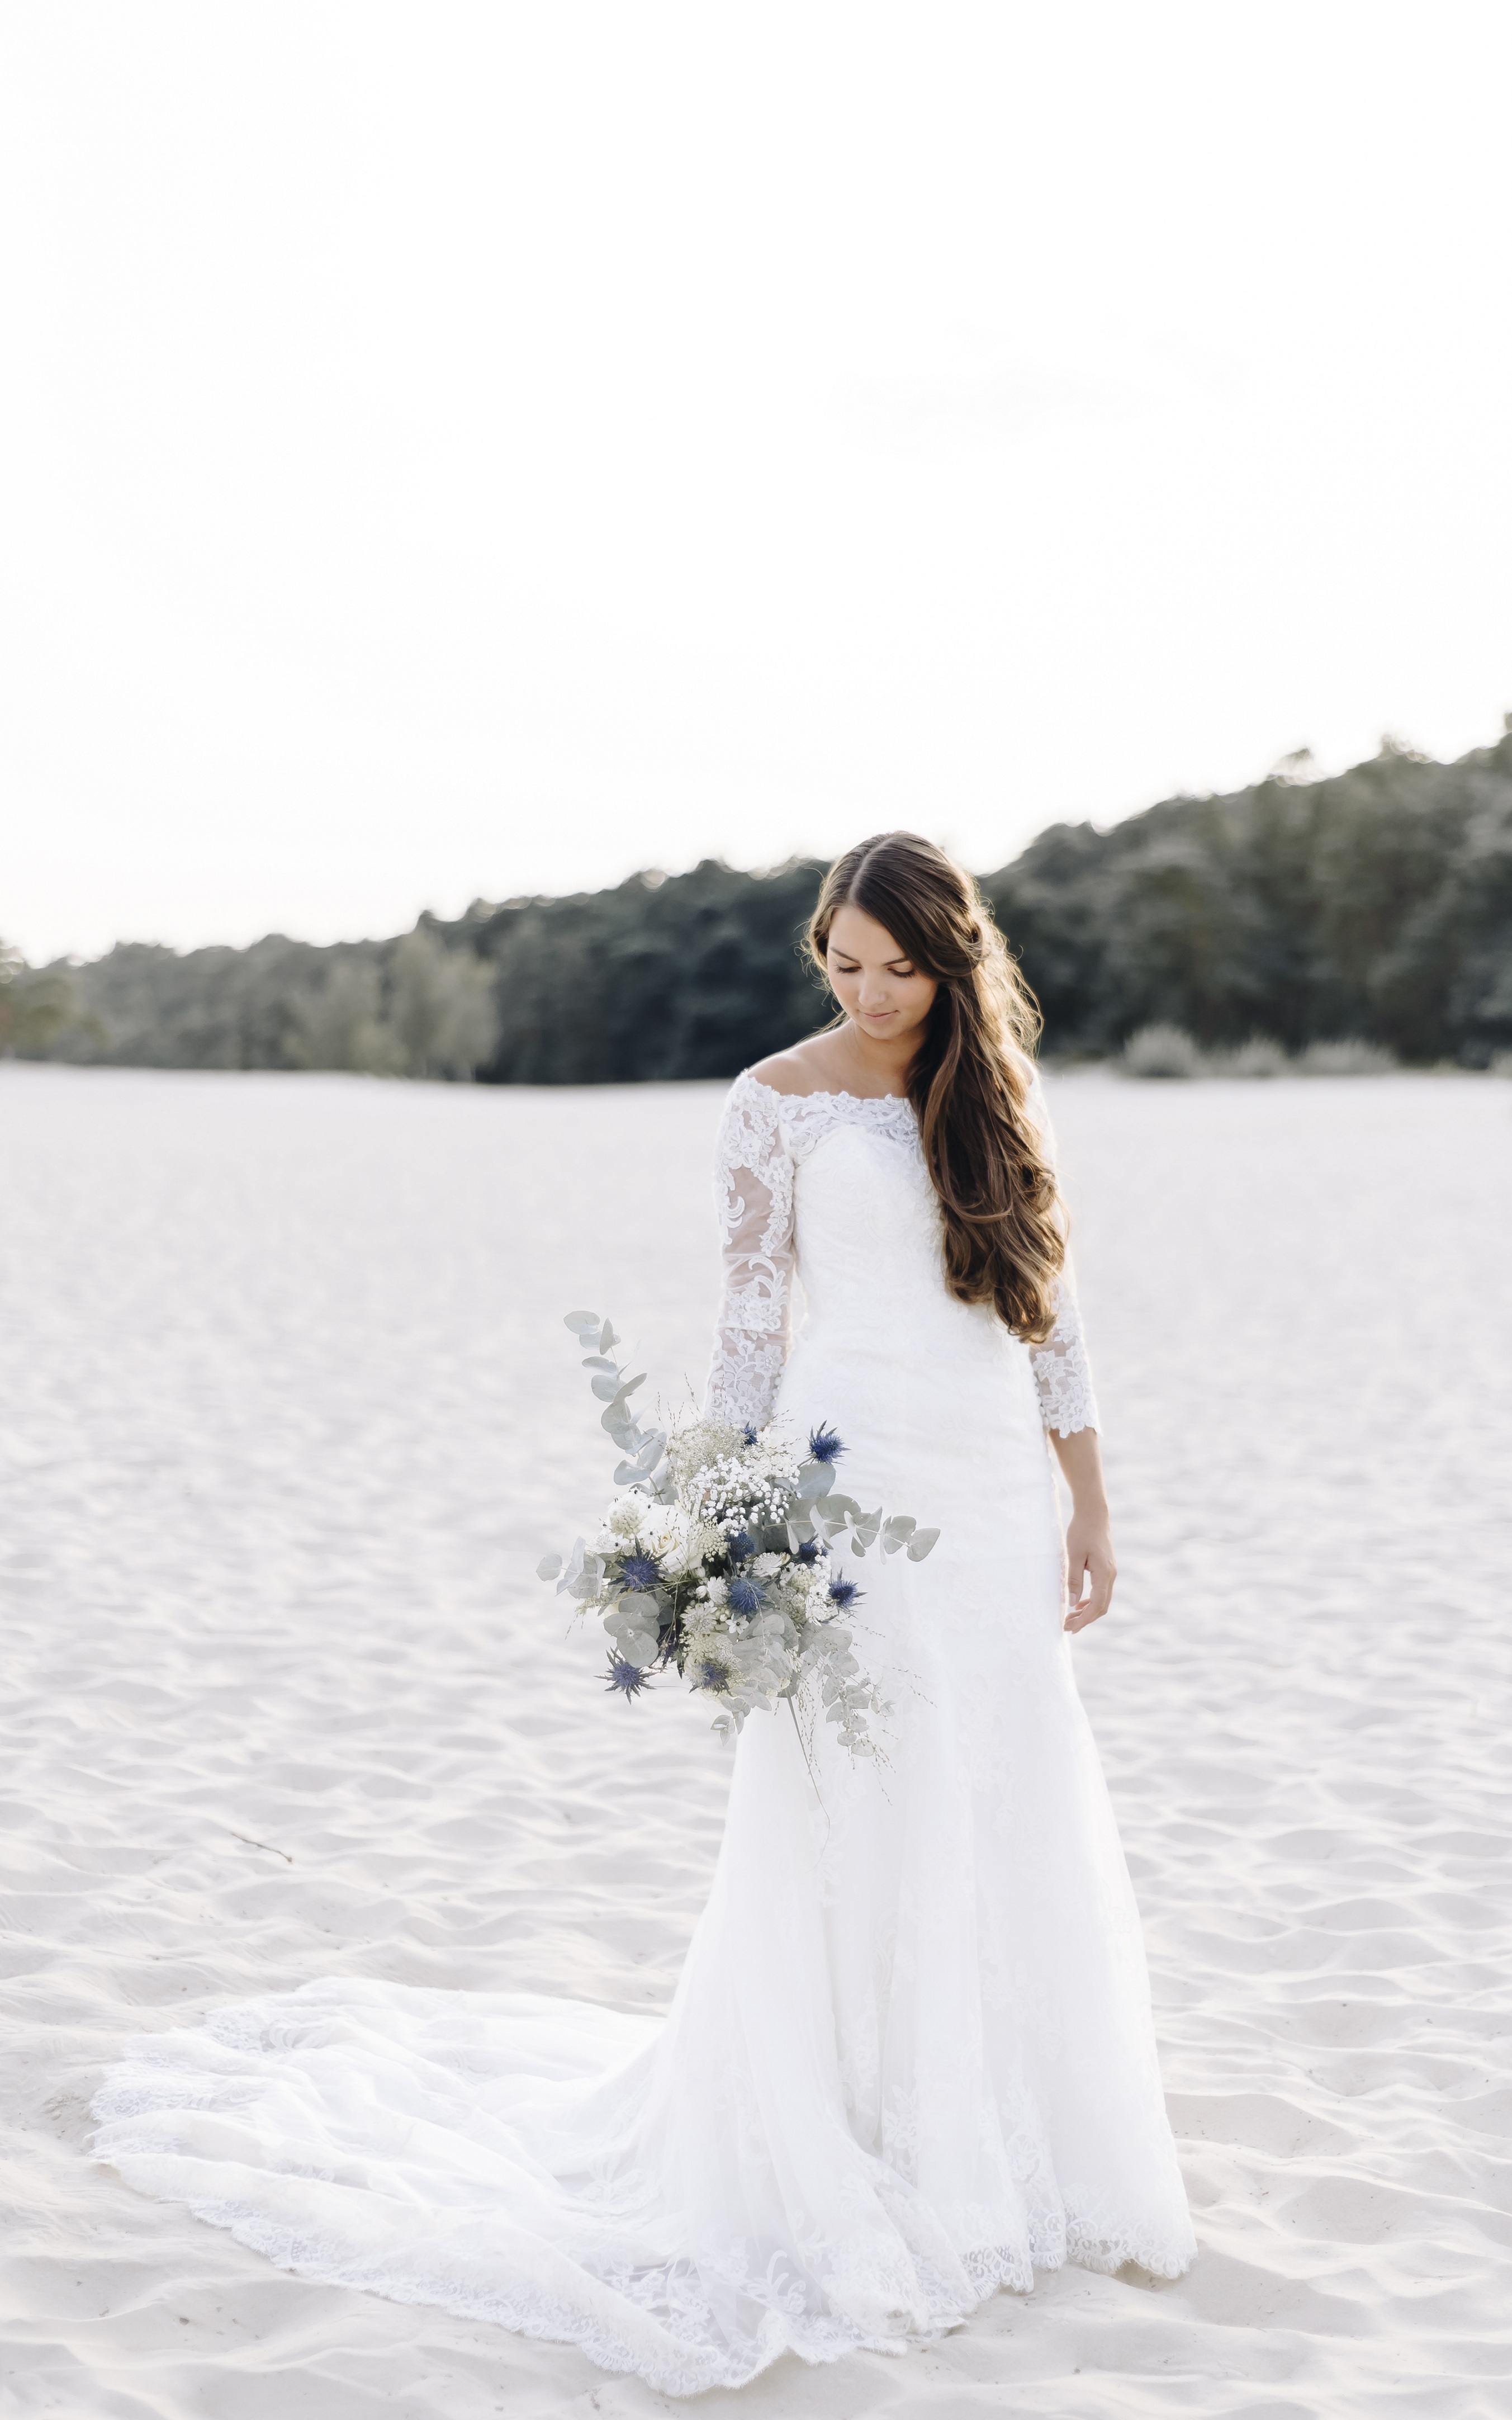 styled shoot trouwblog inspiratie bruid 